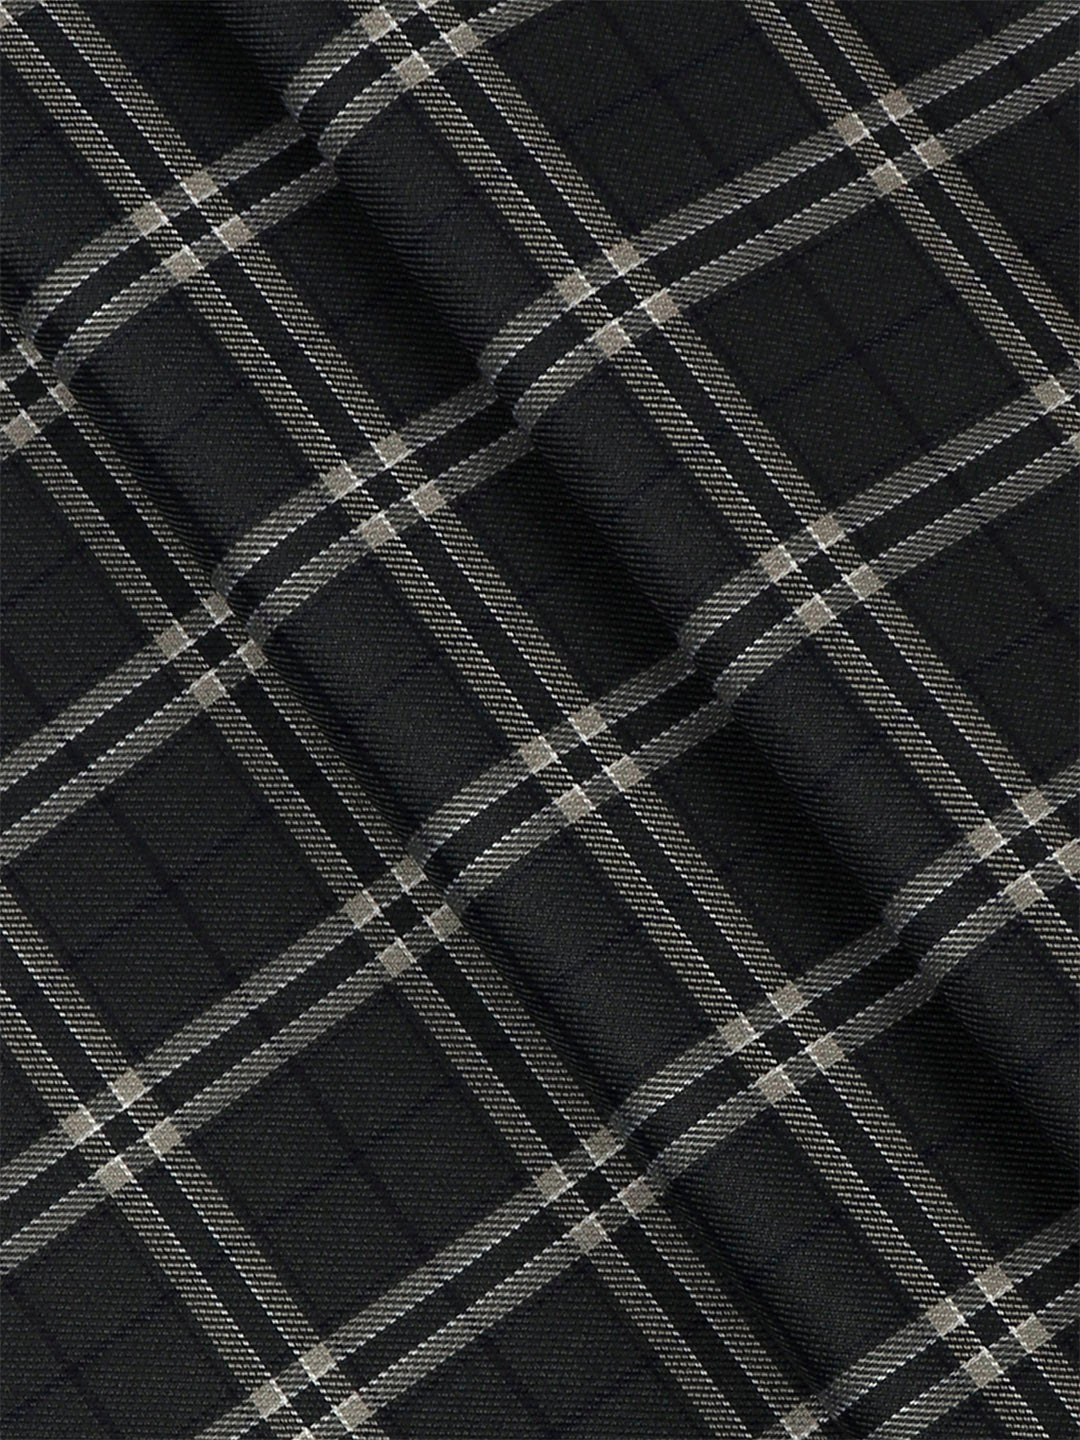 Cotton Black Check Shirt Fabric High Style